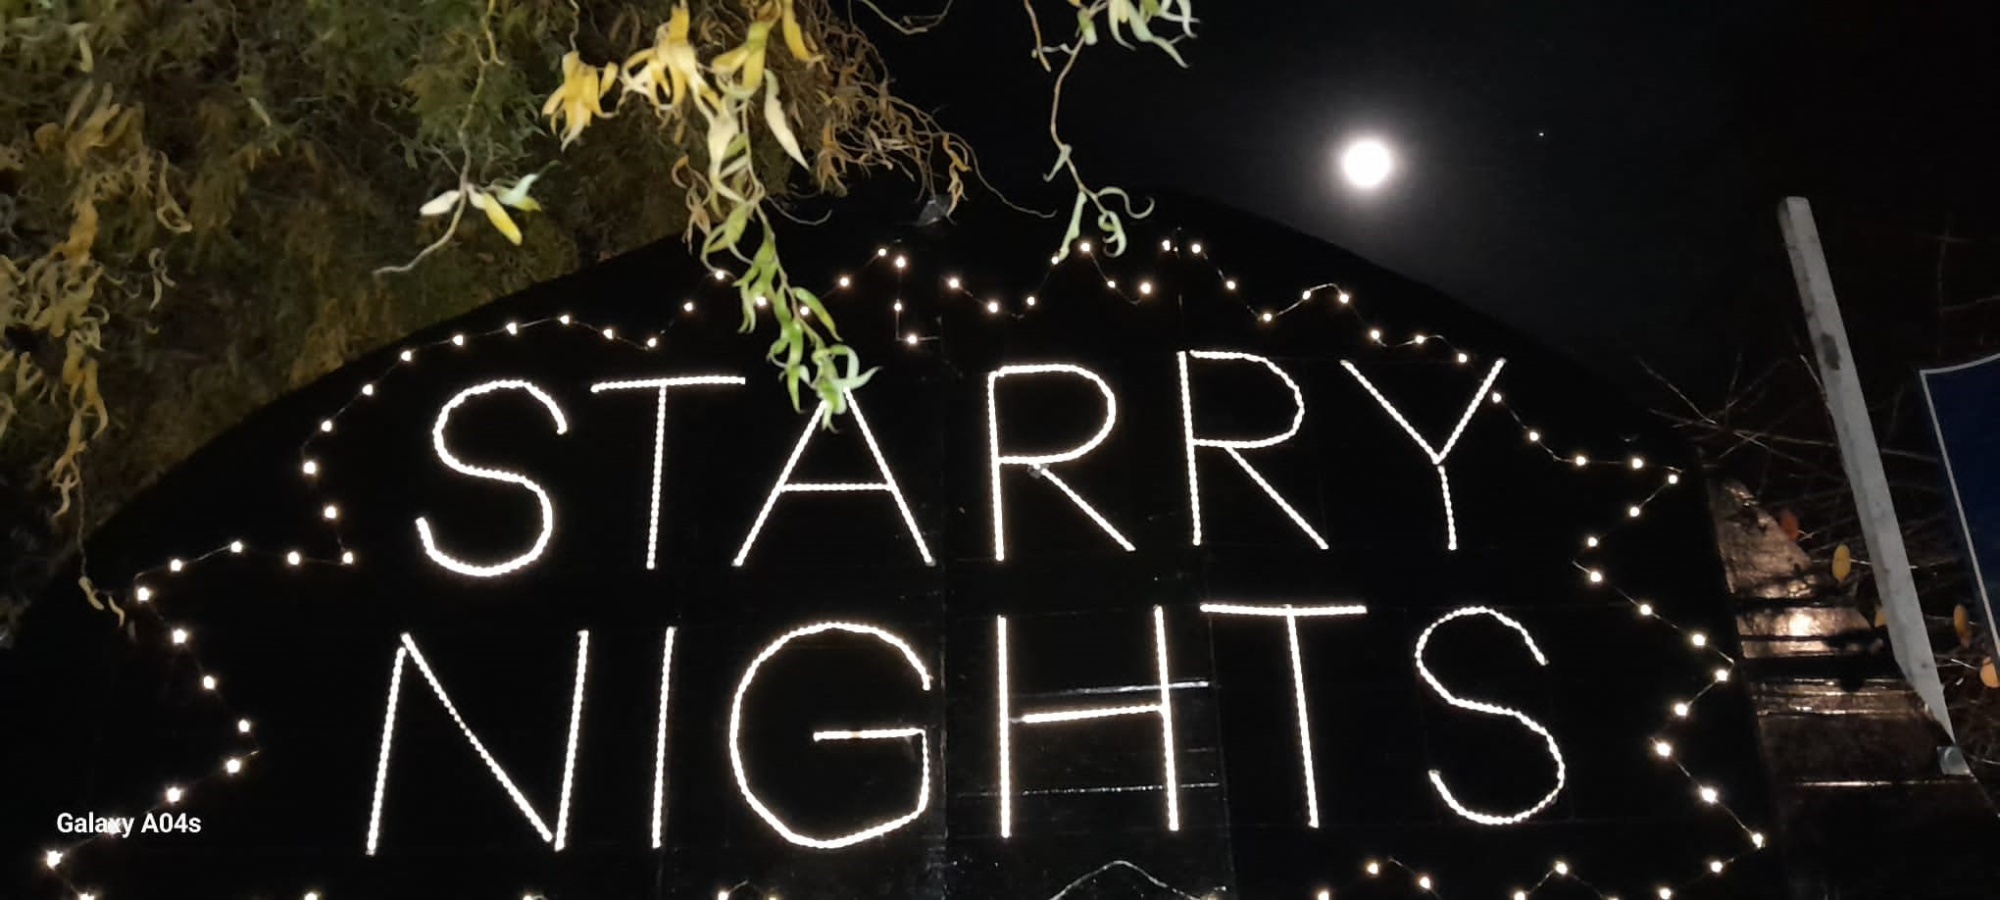 Starry Nights Fair image